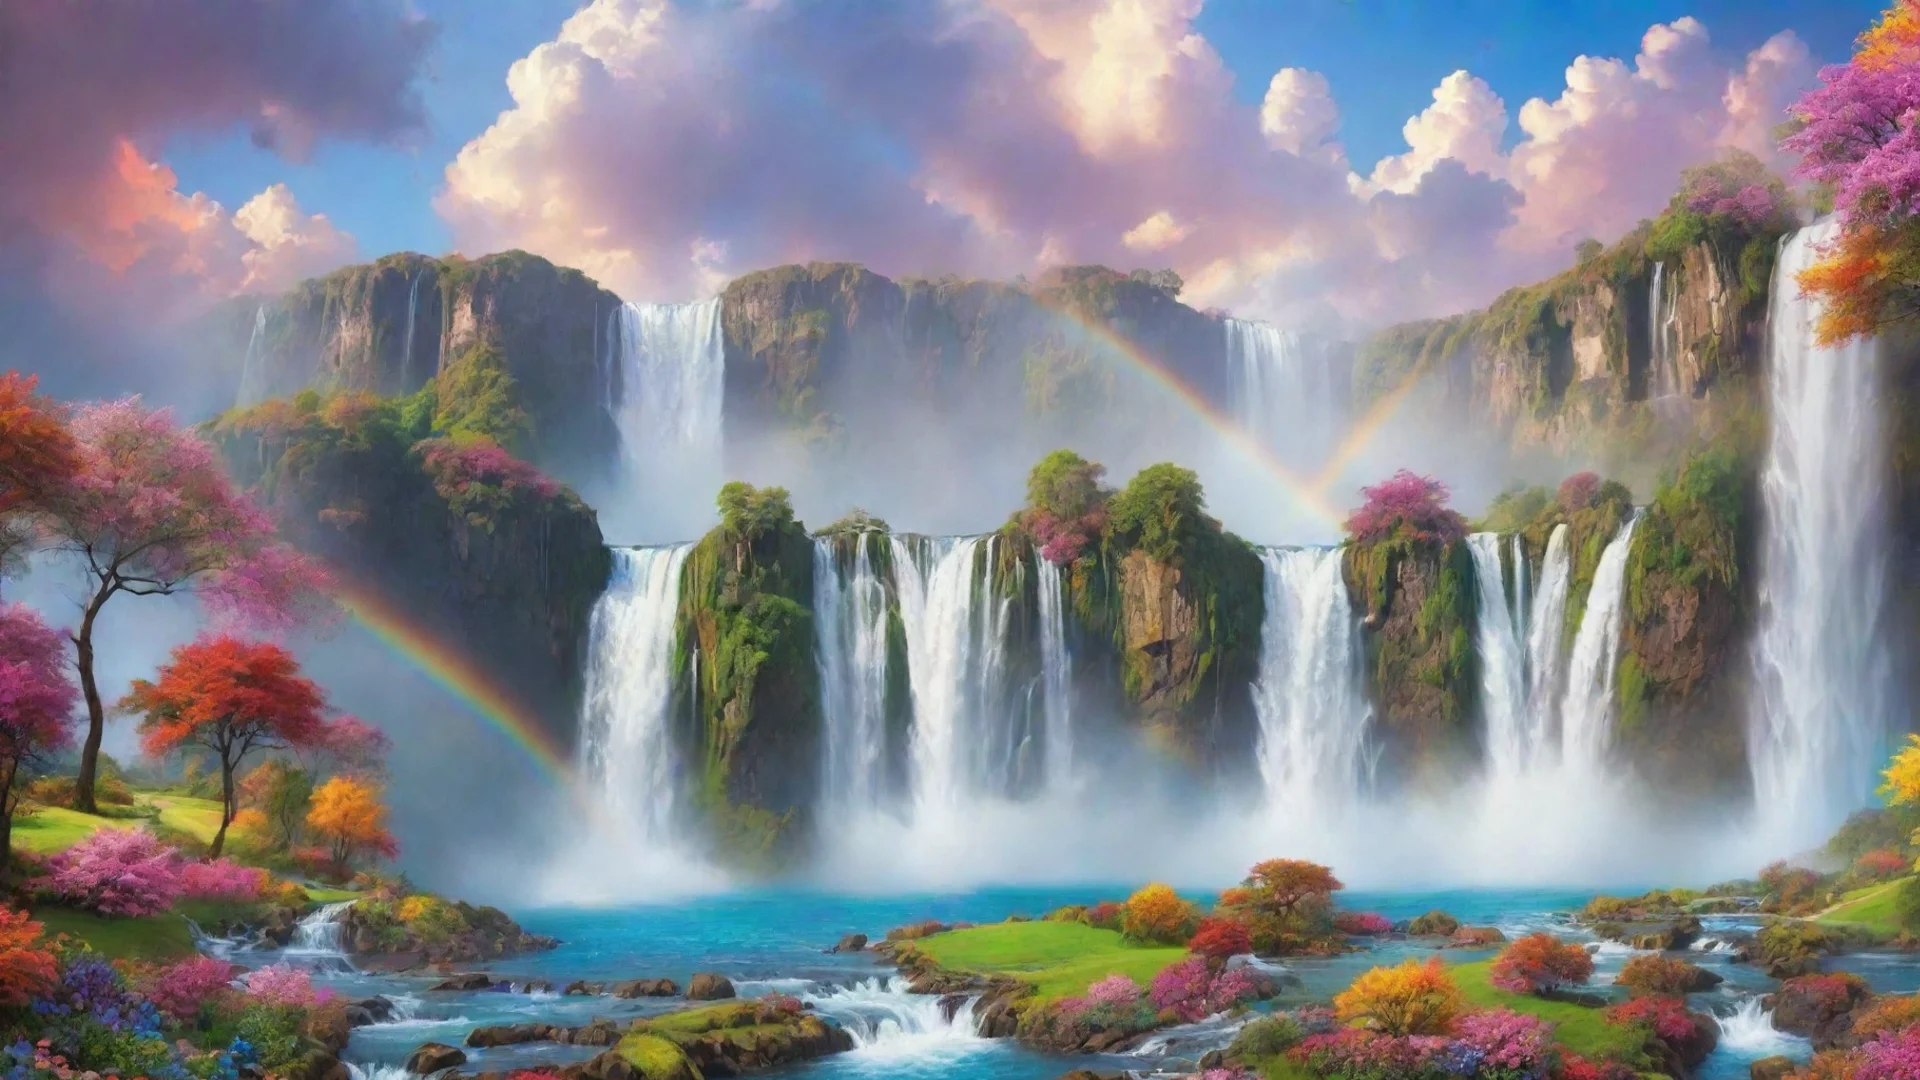 trending dreamy colorful landscape alian world amazing beautiful utopian colors flowers waterfalls rainbows clouds good looking fantastic 1 wide